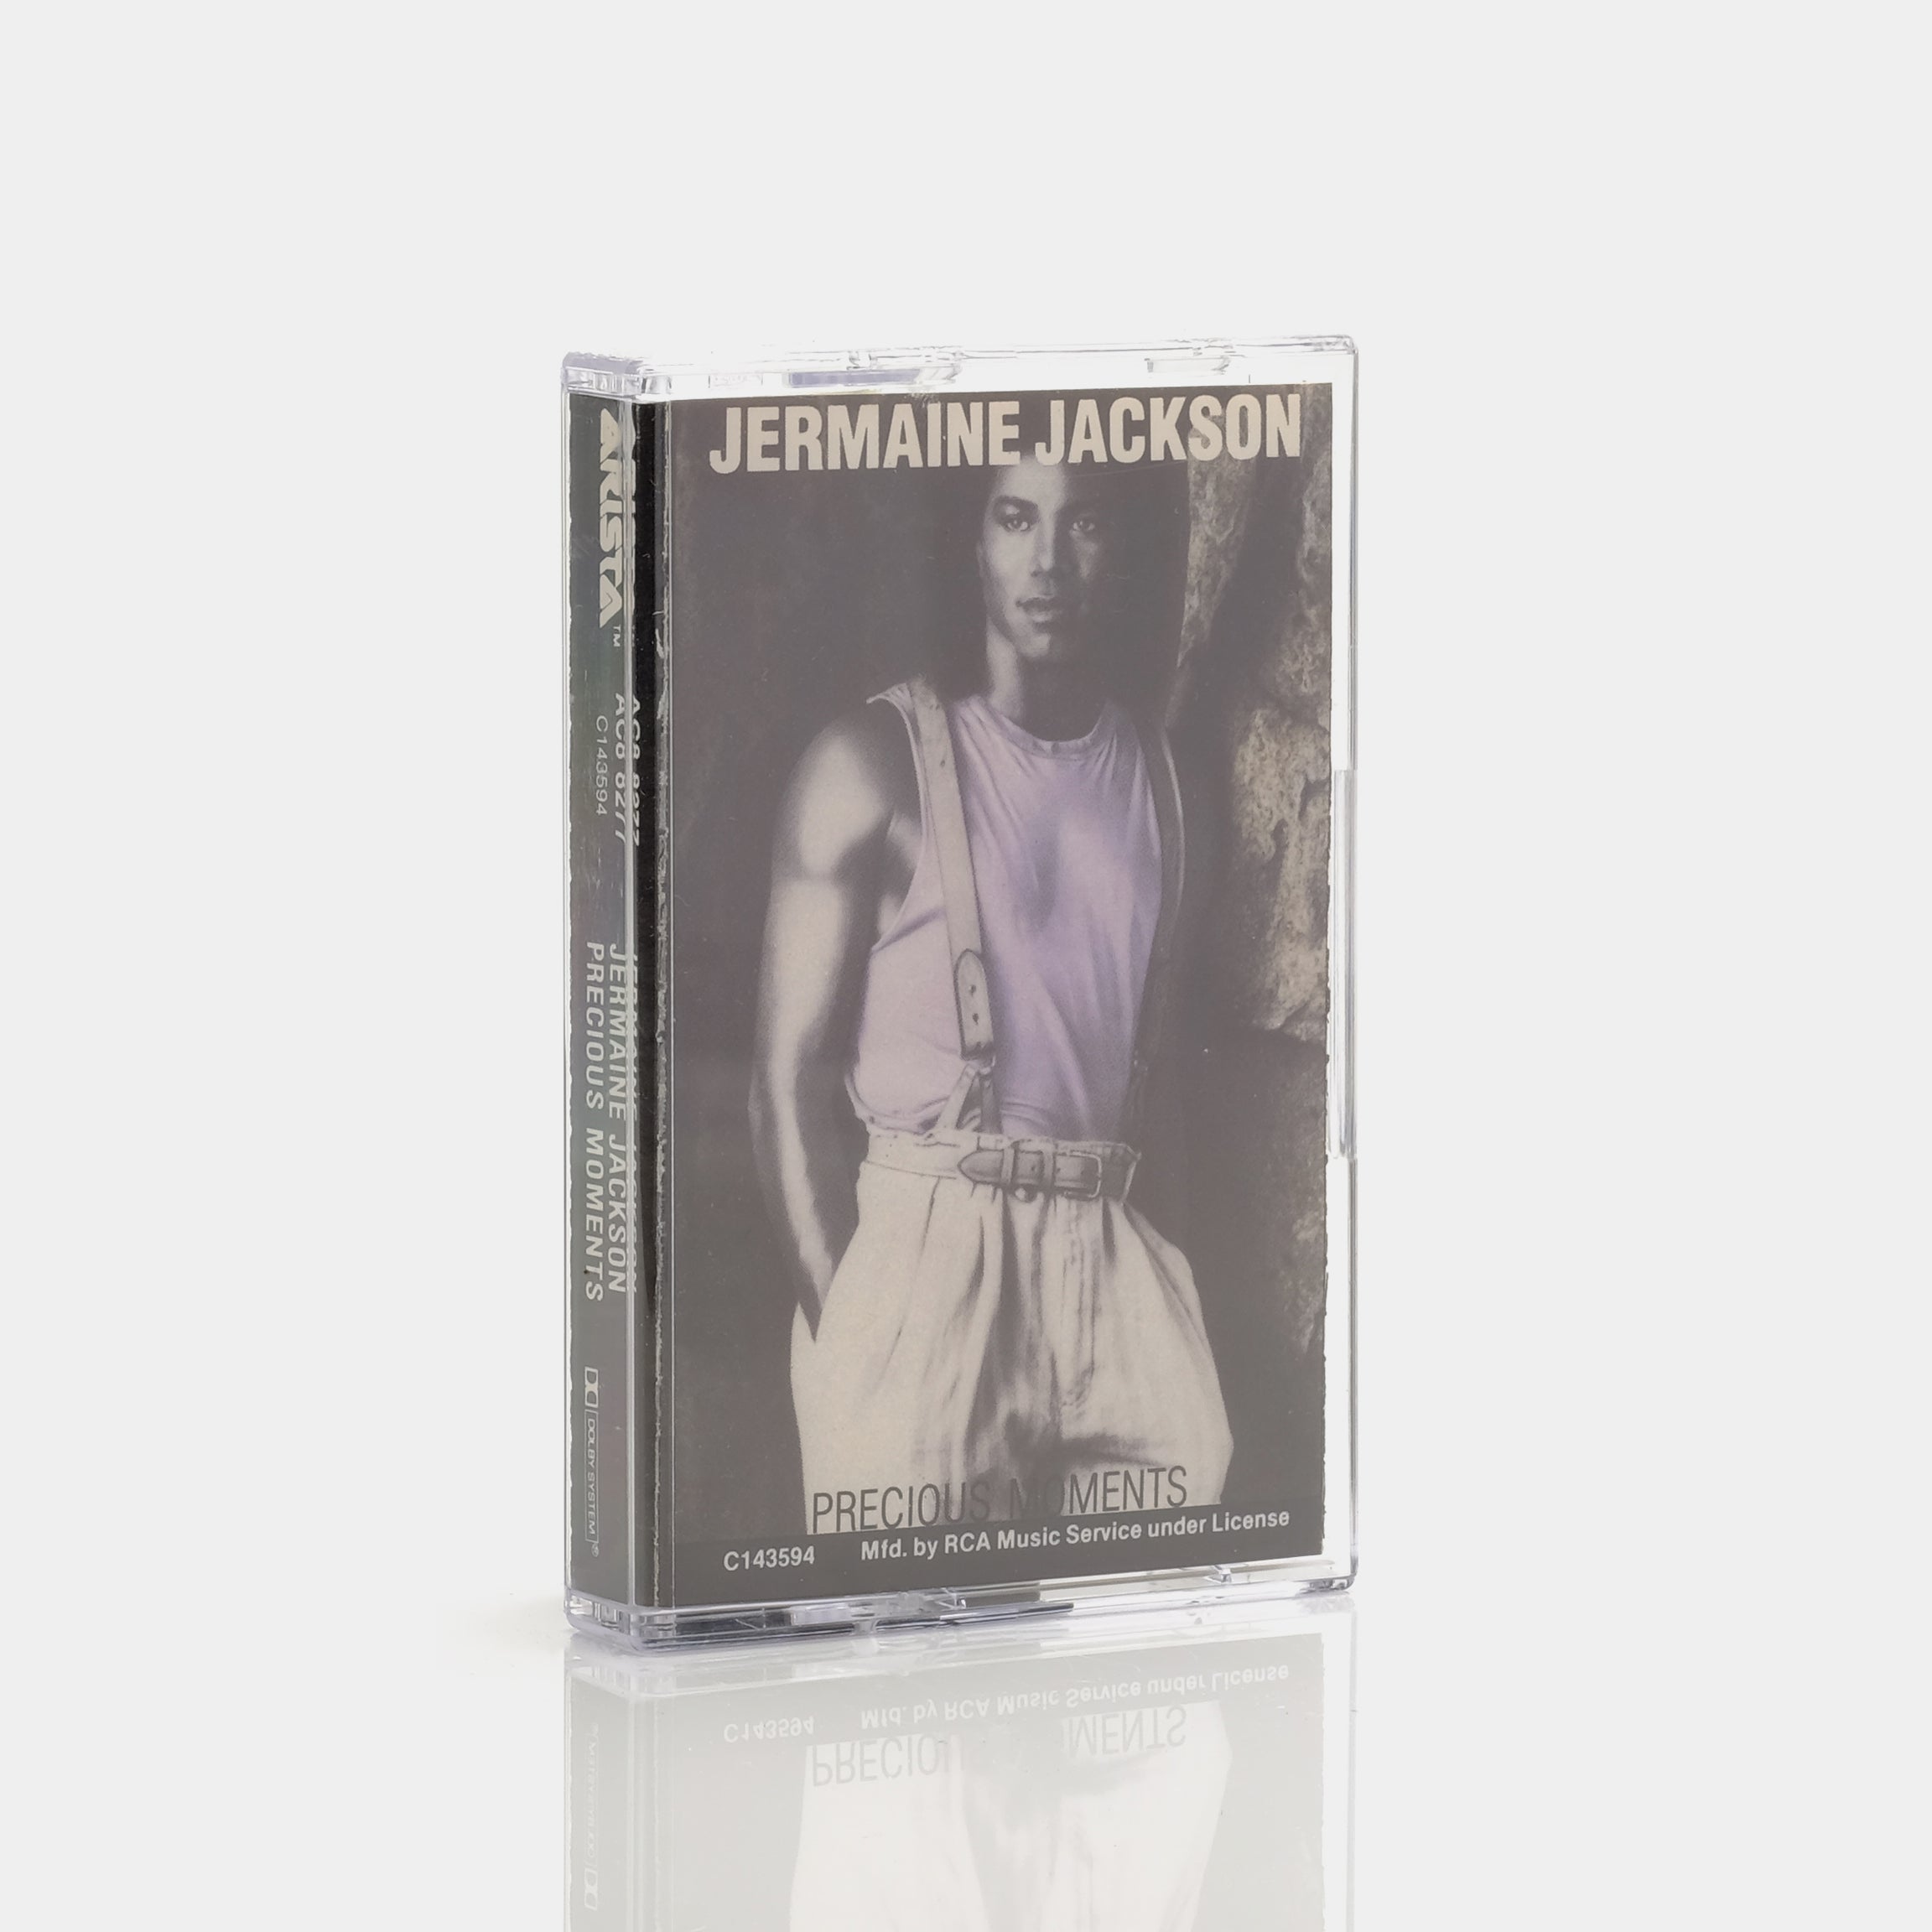 Jermaine Jackson - Precious Moments Cassette Tape